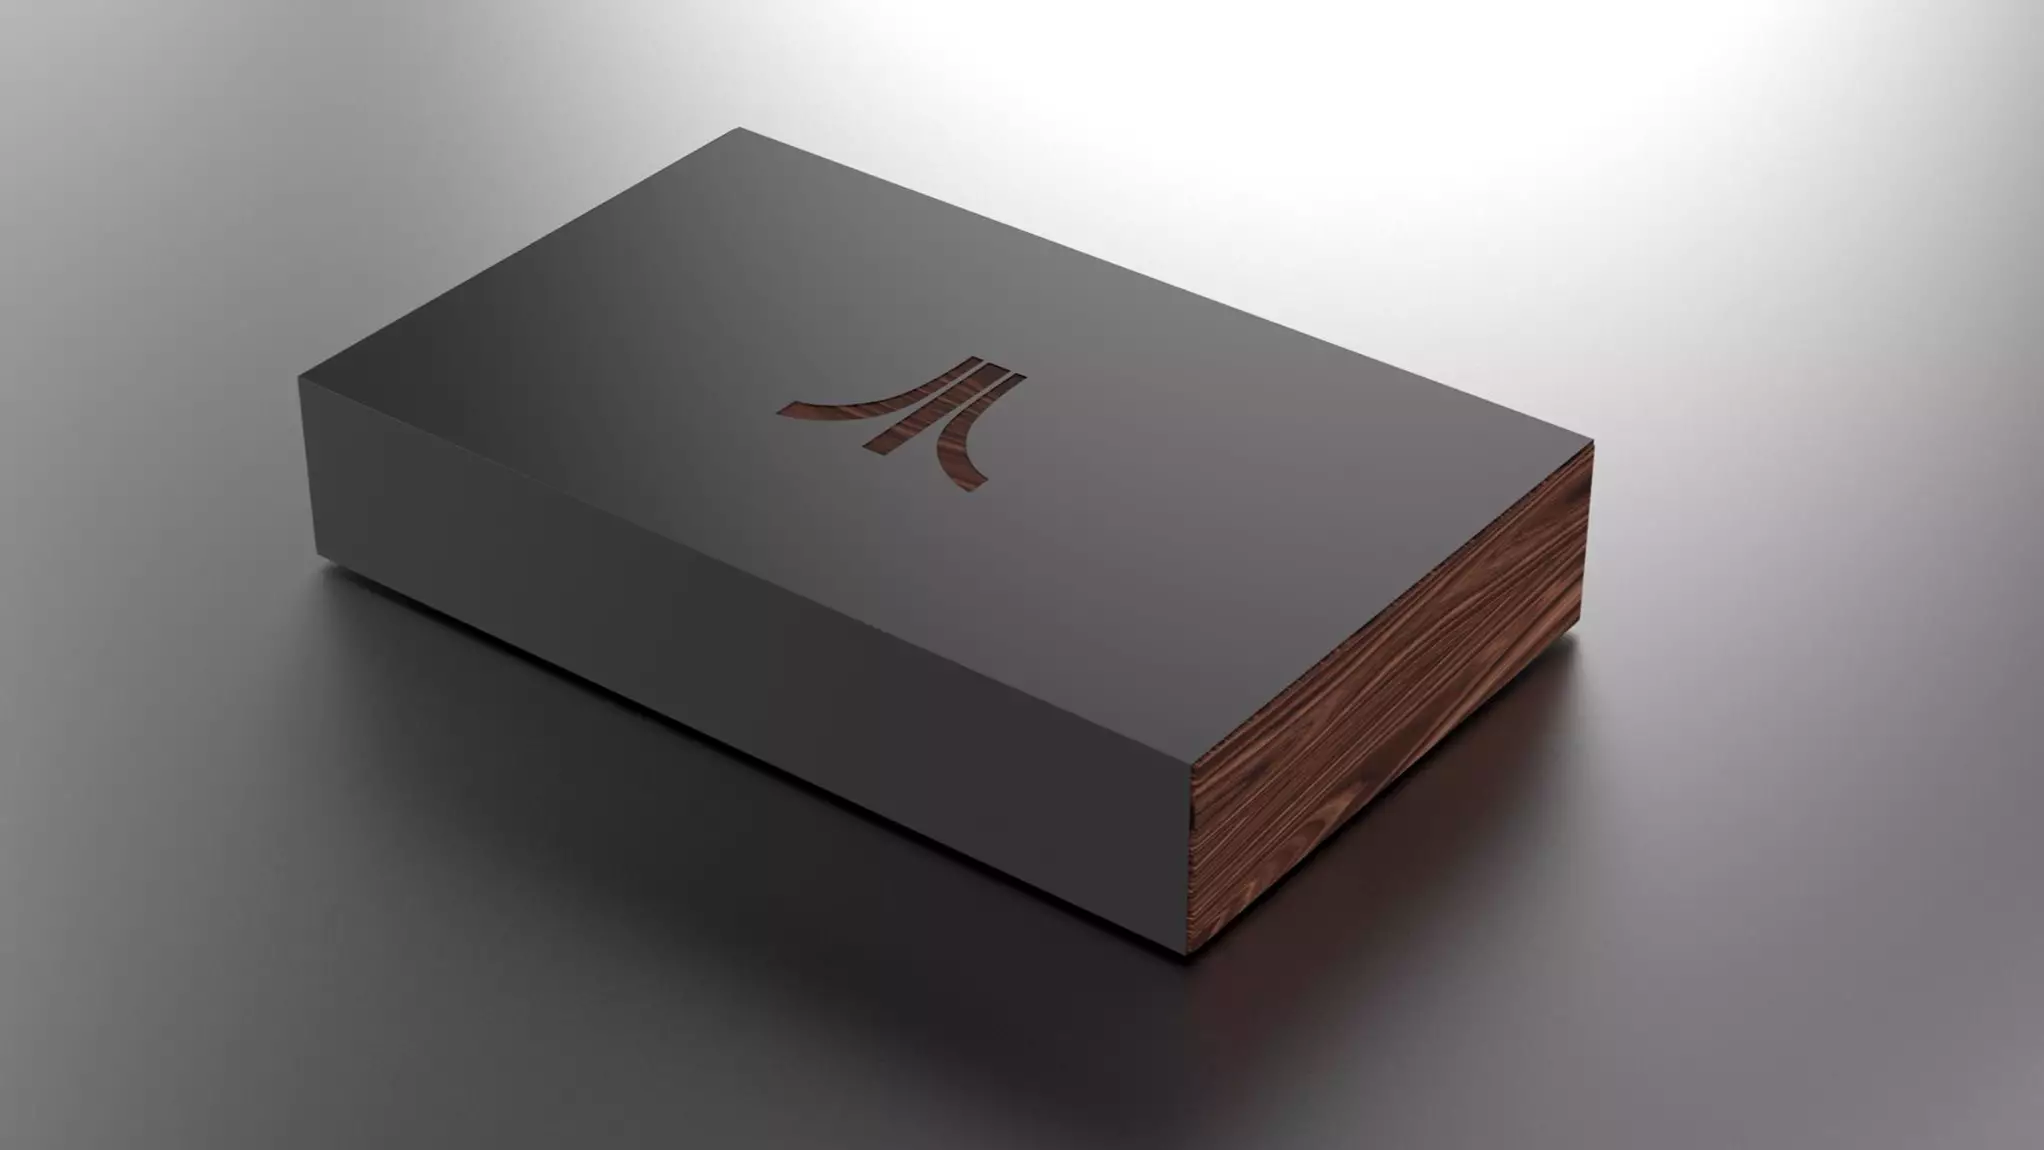 Atari Announces More Details About The 'Ataribox'